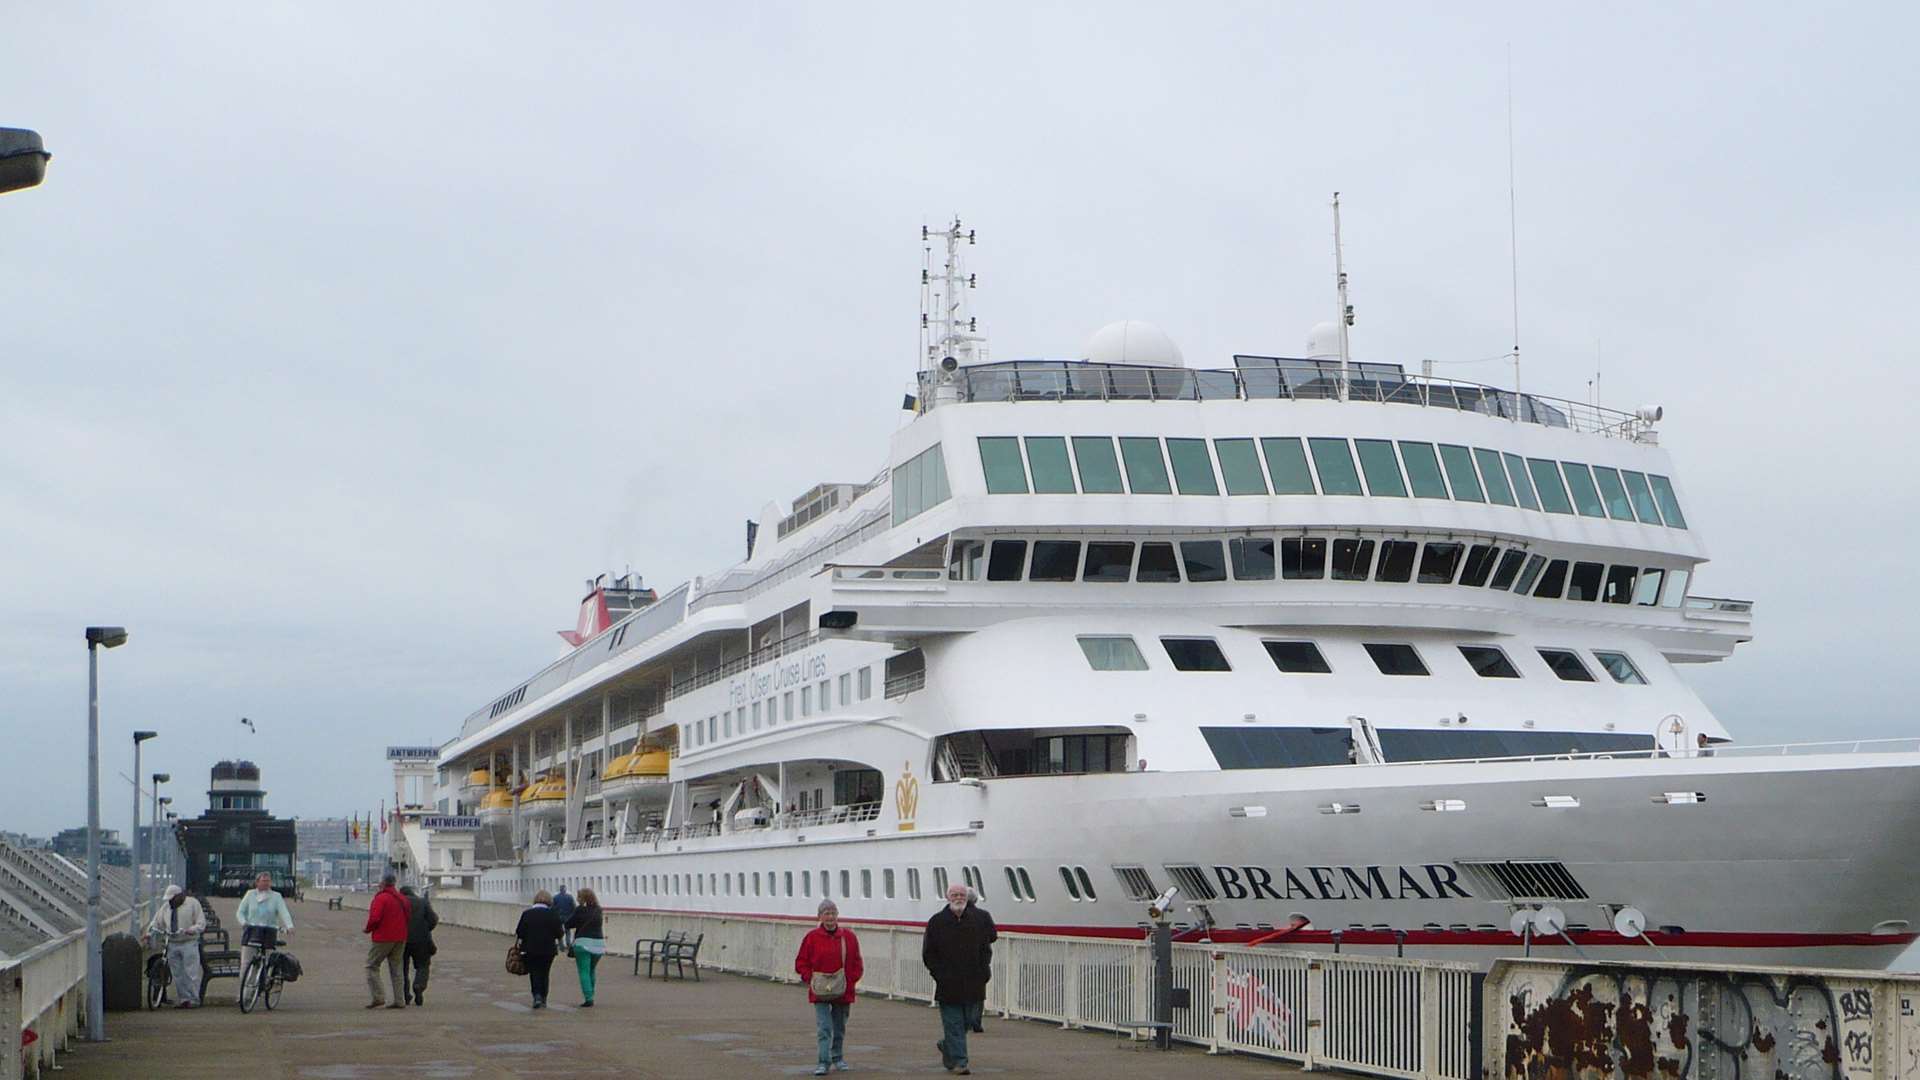 The Fred. Olsen cruise ship Braemar docked at Antwerp